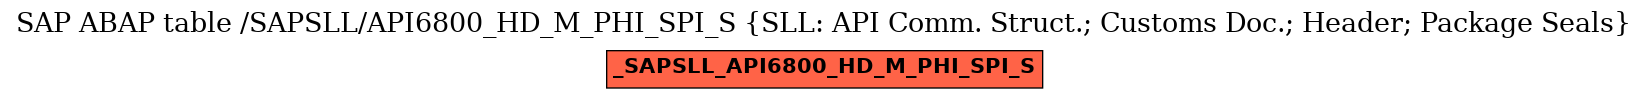 E-R Diagram for table /SAPSLL/API6800_HD_M_PHI_SPI_S (SLL: API Comm. Struct.; Customs Doc.; Header; Package Seals)